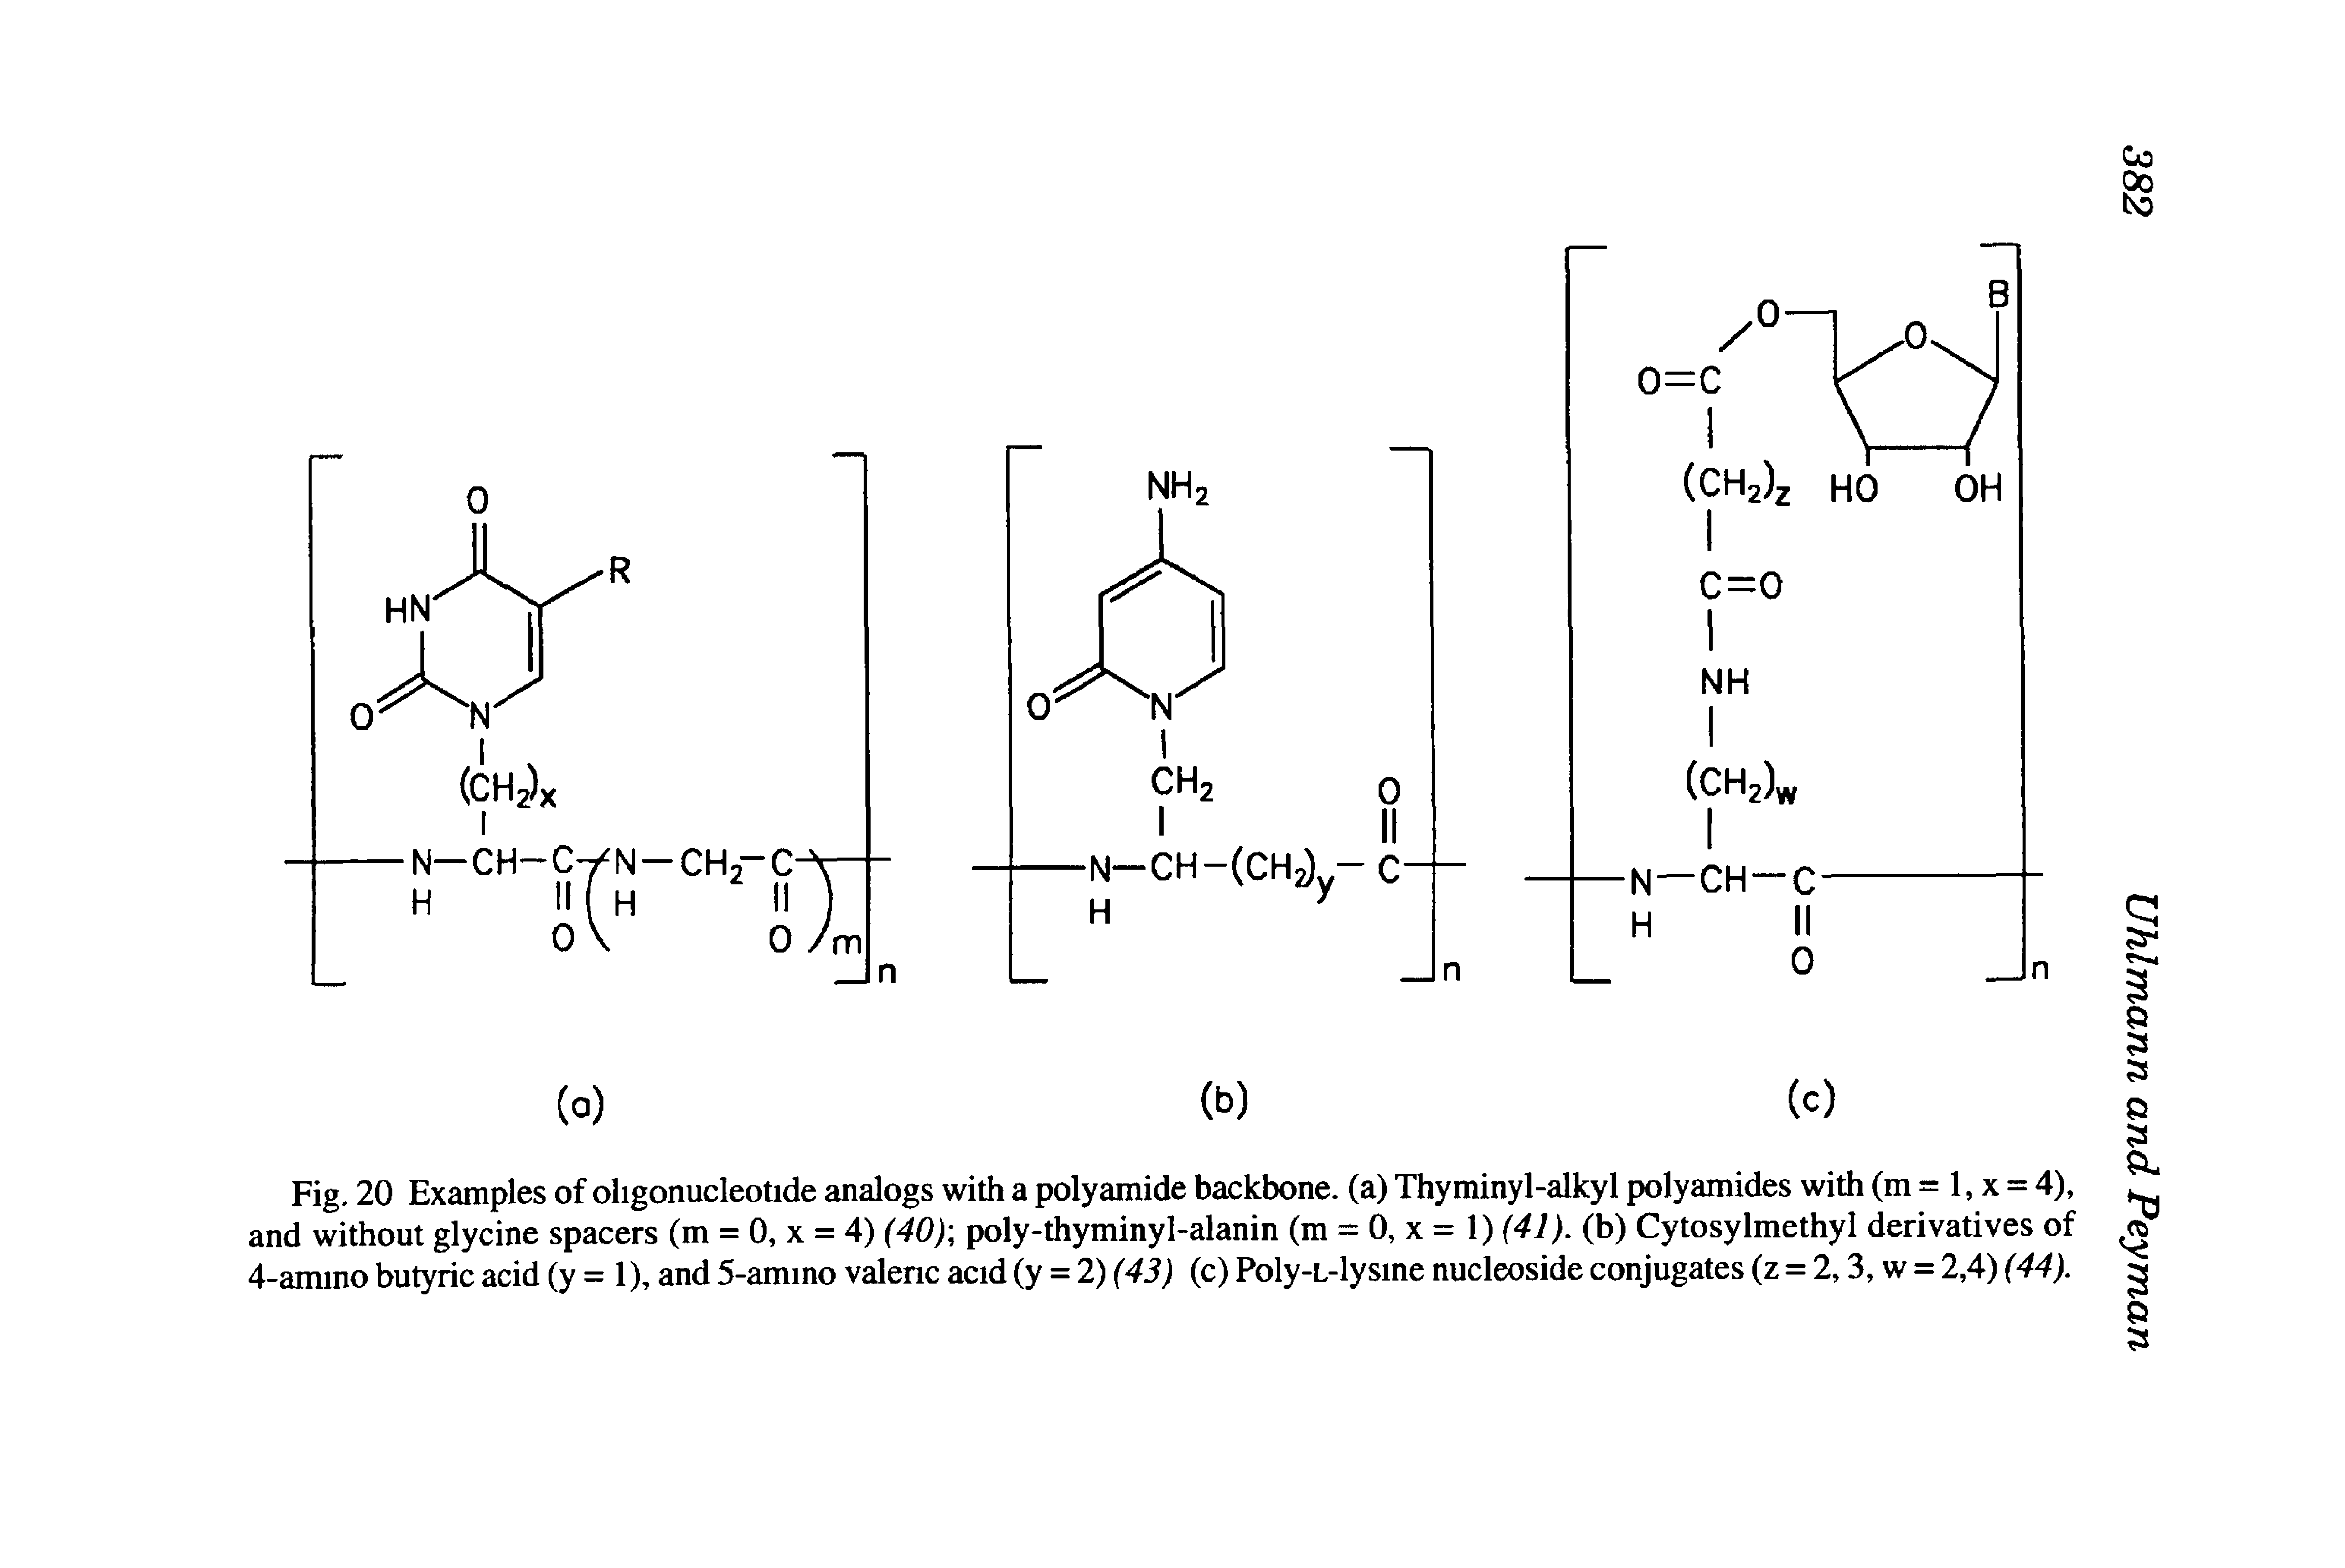 Fig. 20 Examples of oligonucleotide analogs with a polyamide backbone, (a) Thyminyl-alkyl polyamides with (m = 1, x = 4), and without glycine spacers (m = 0, x = 4) (40) poly-thyminyl-alanin (m = 0, x = 1) (41), (b) Cytosylmethyl derivatives of 4-amino butyric acid (y = 1), and 5-amino valeric acid (y = 2) (43) (c) PoIy-L-lysine nucleoside conjugates (z = 2 3, w = 2,4) (44),...